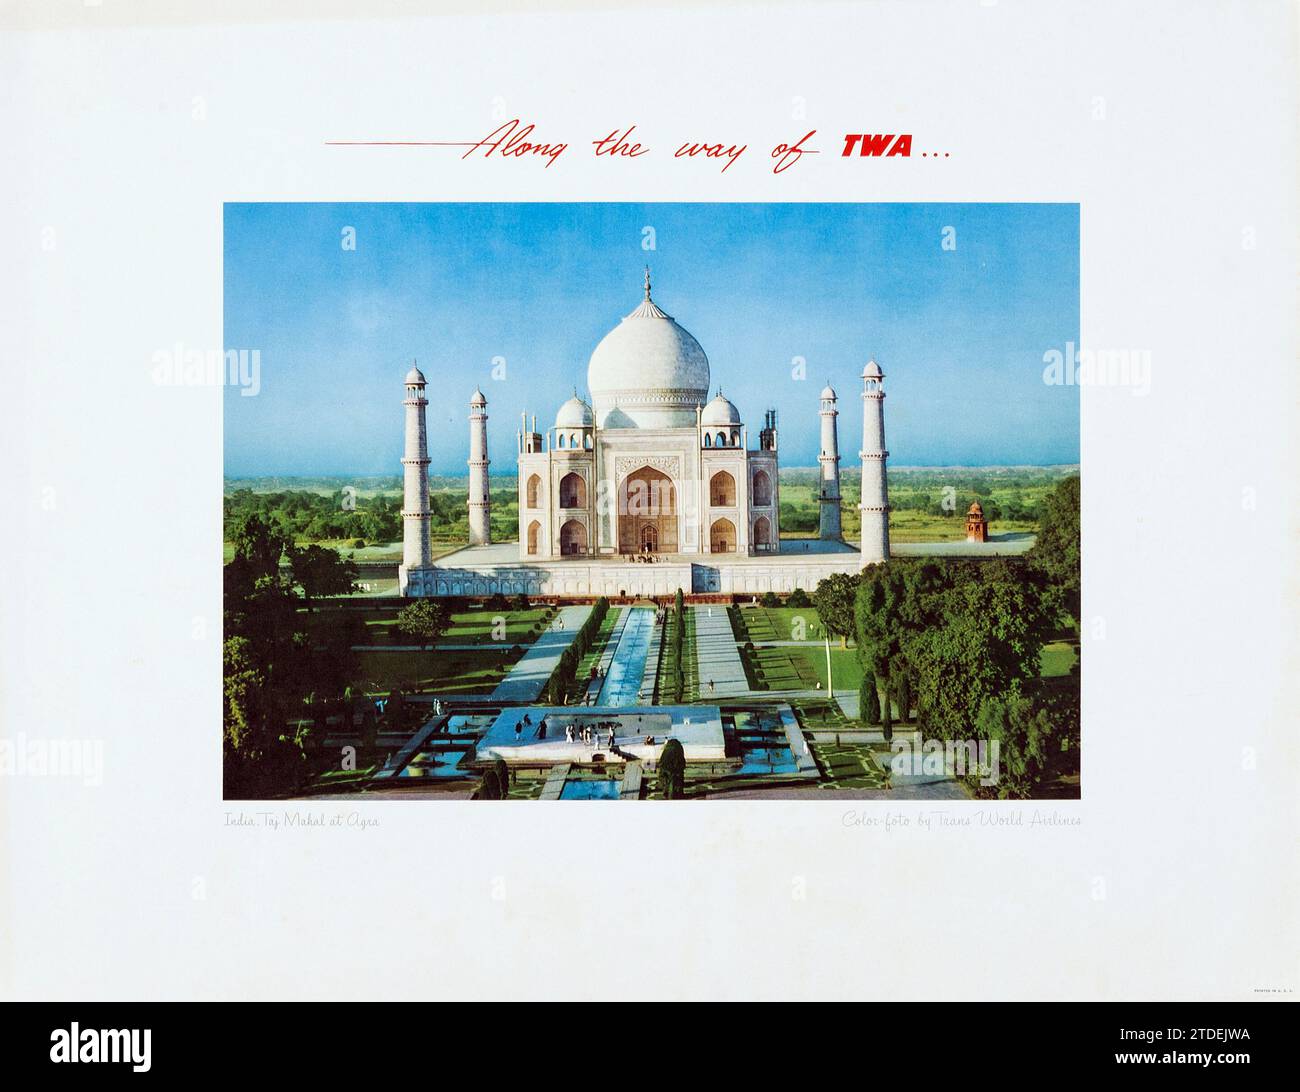 TWA travel poster for India - Along The Way of TWA feat. Taj Mahal at Agra - 1960s Stock Photo